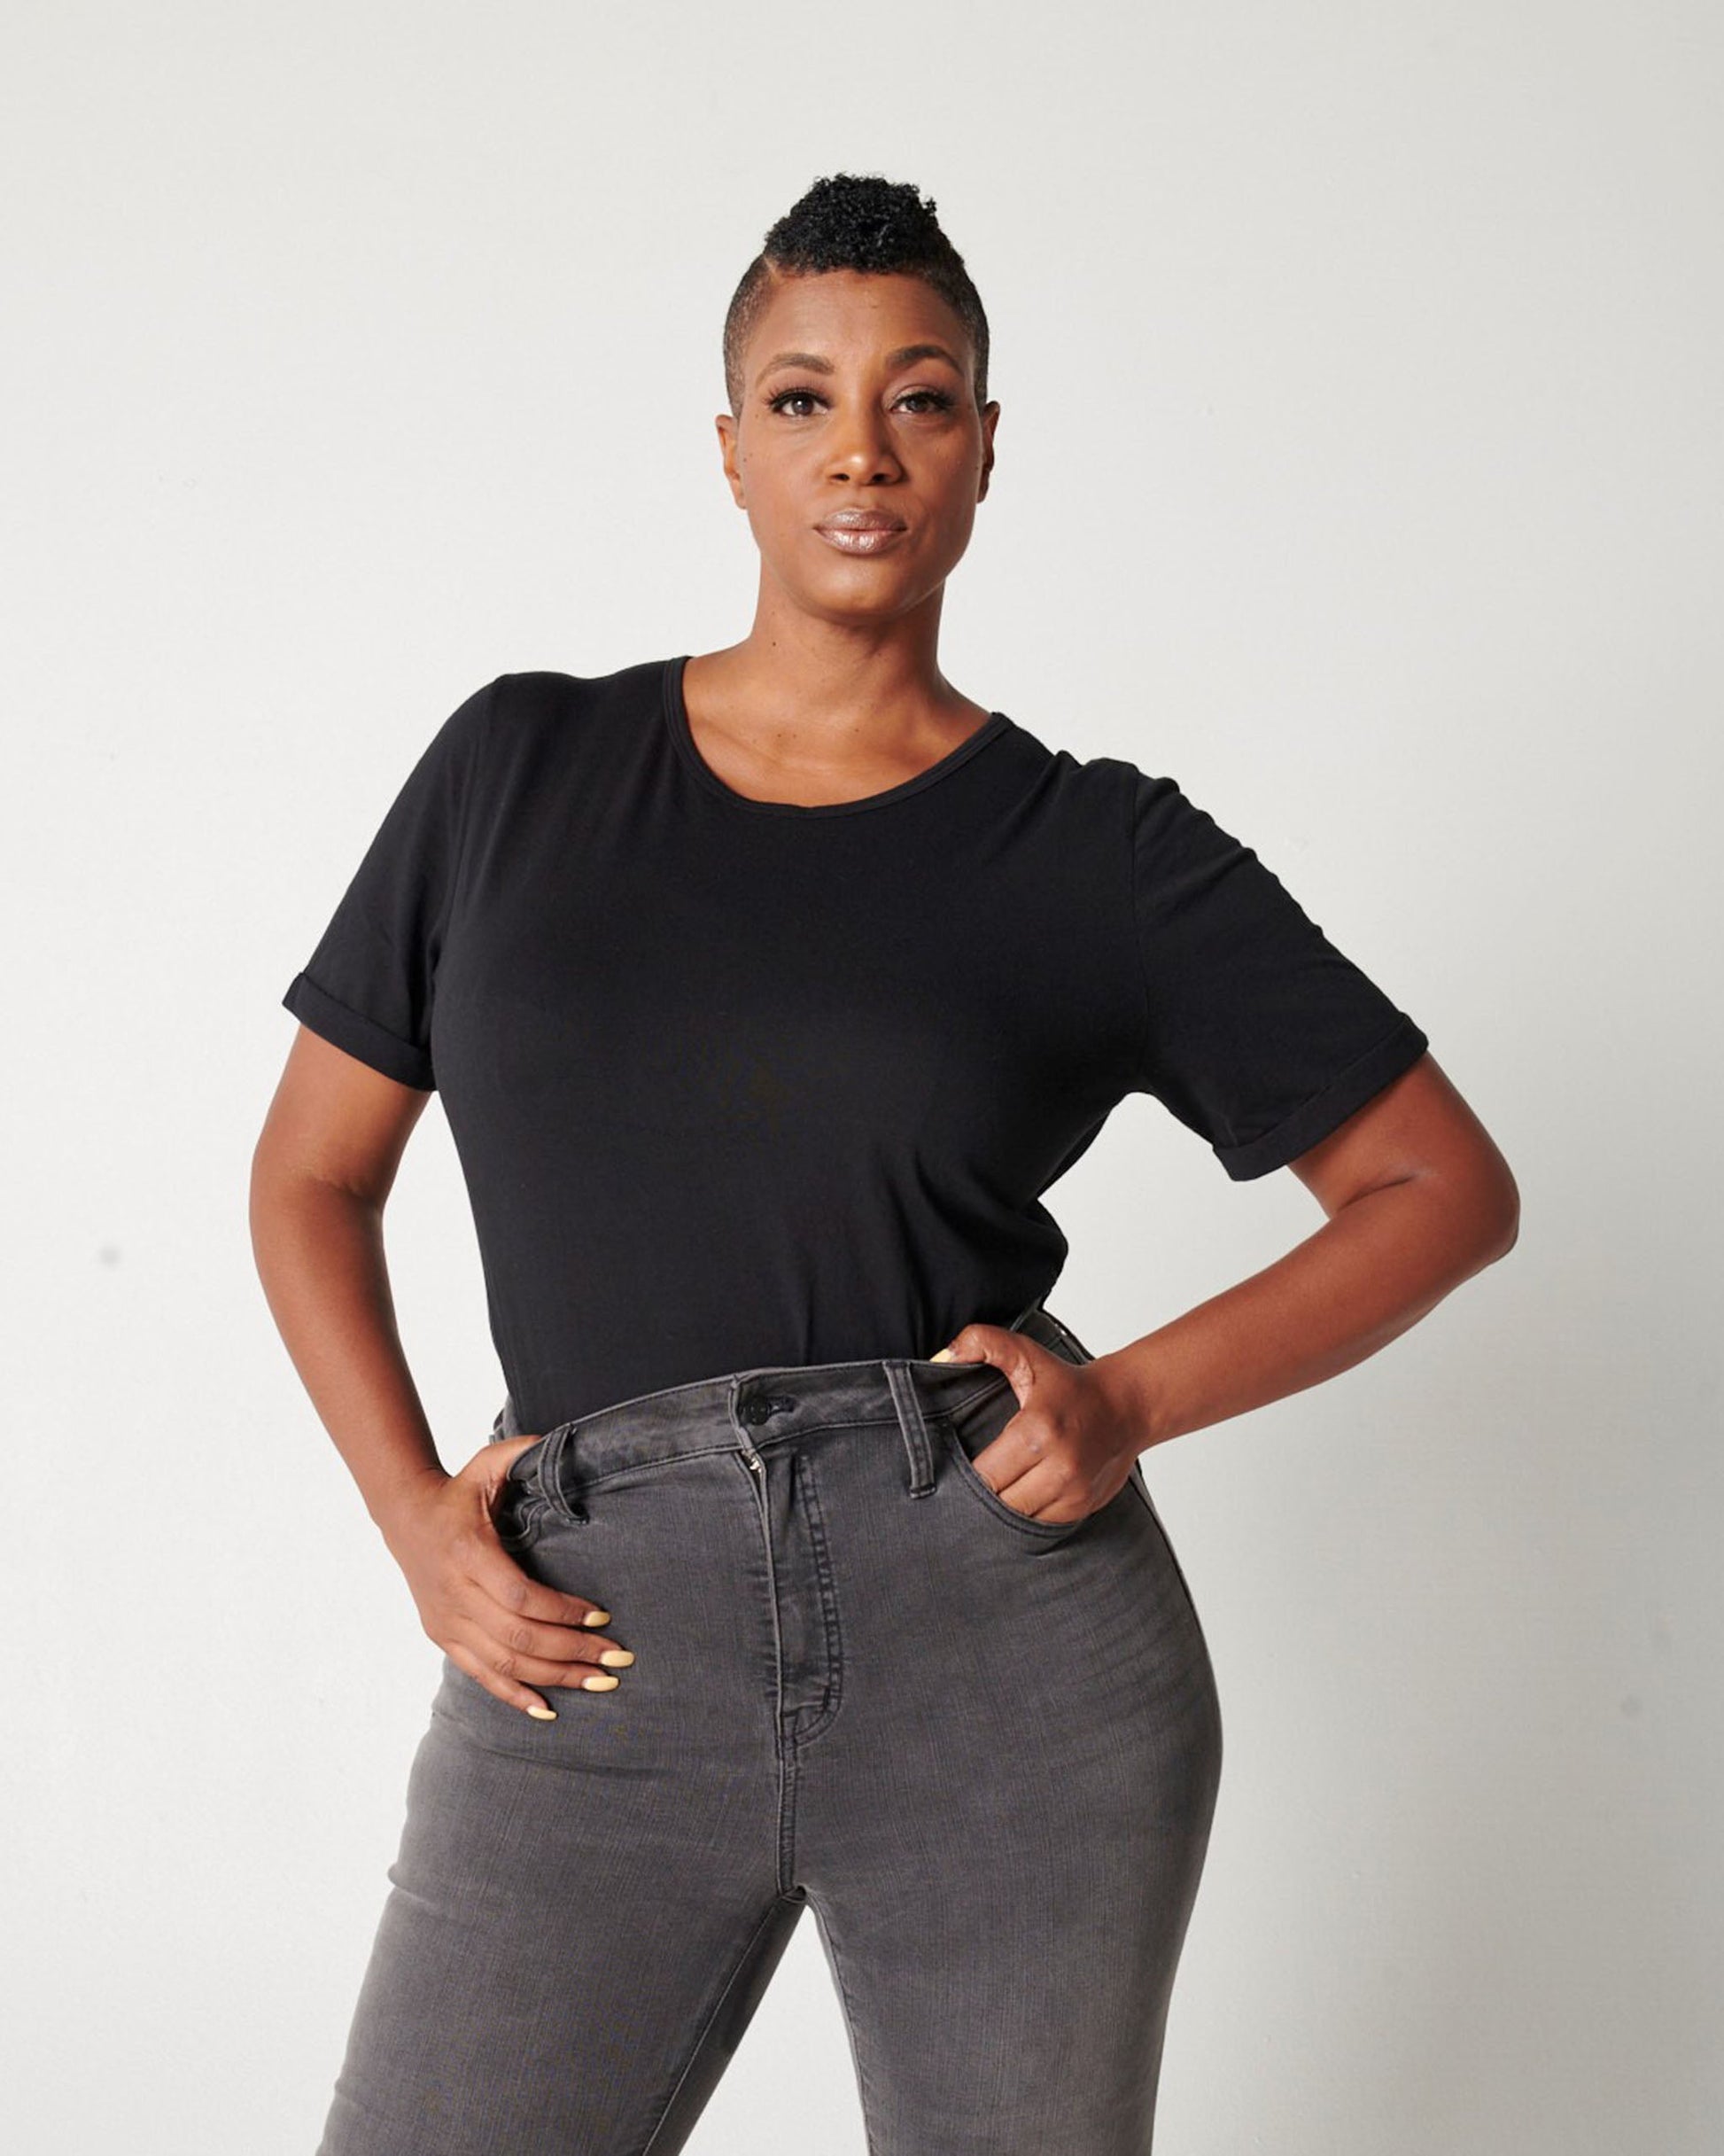 Black cotton crewneck, rolled sleeve tshirt on black fuller bust model wearing black jeans and hands in pockets